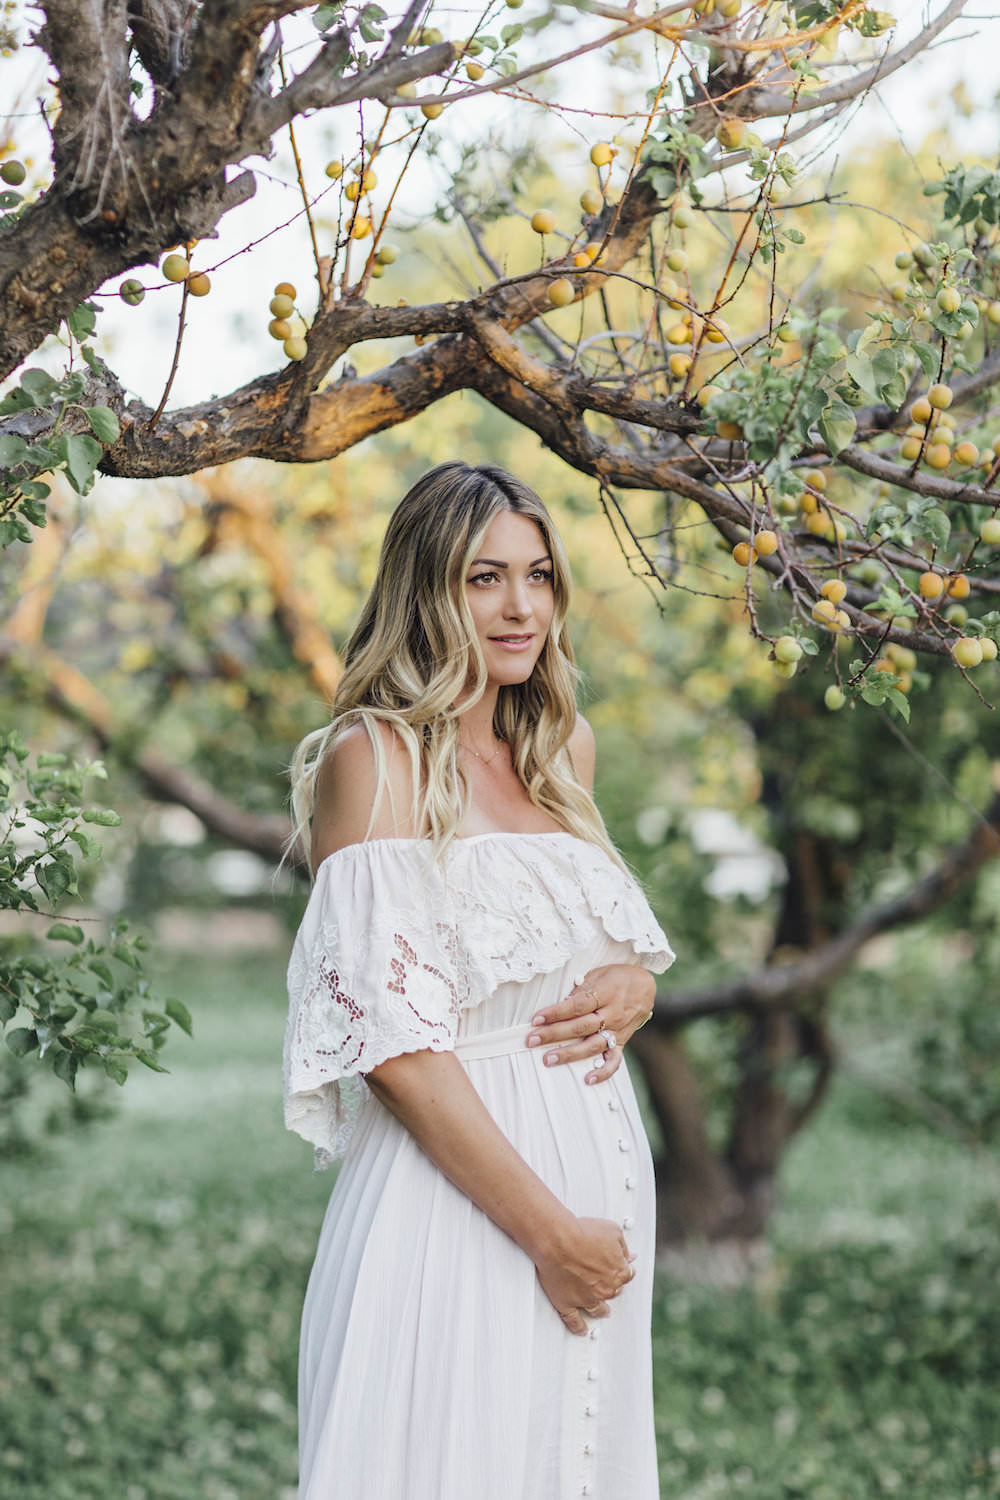 Dash of Darling shares her 24 week pregnancy update in a bumpdate